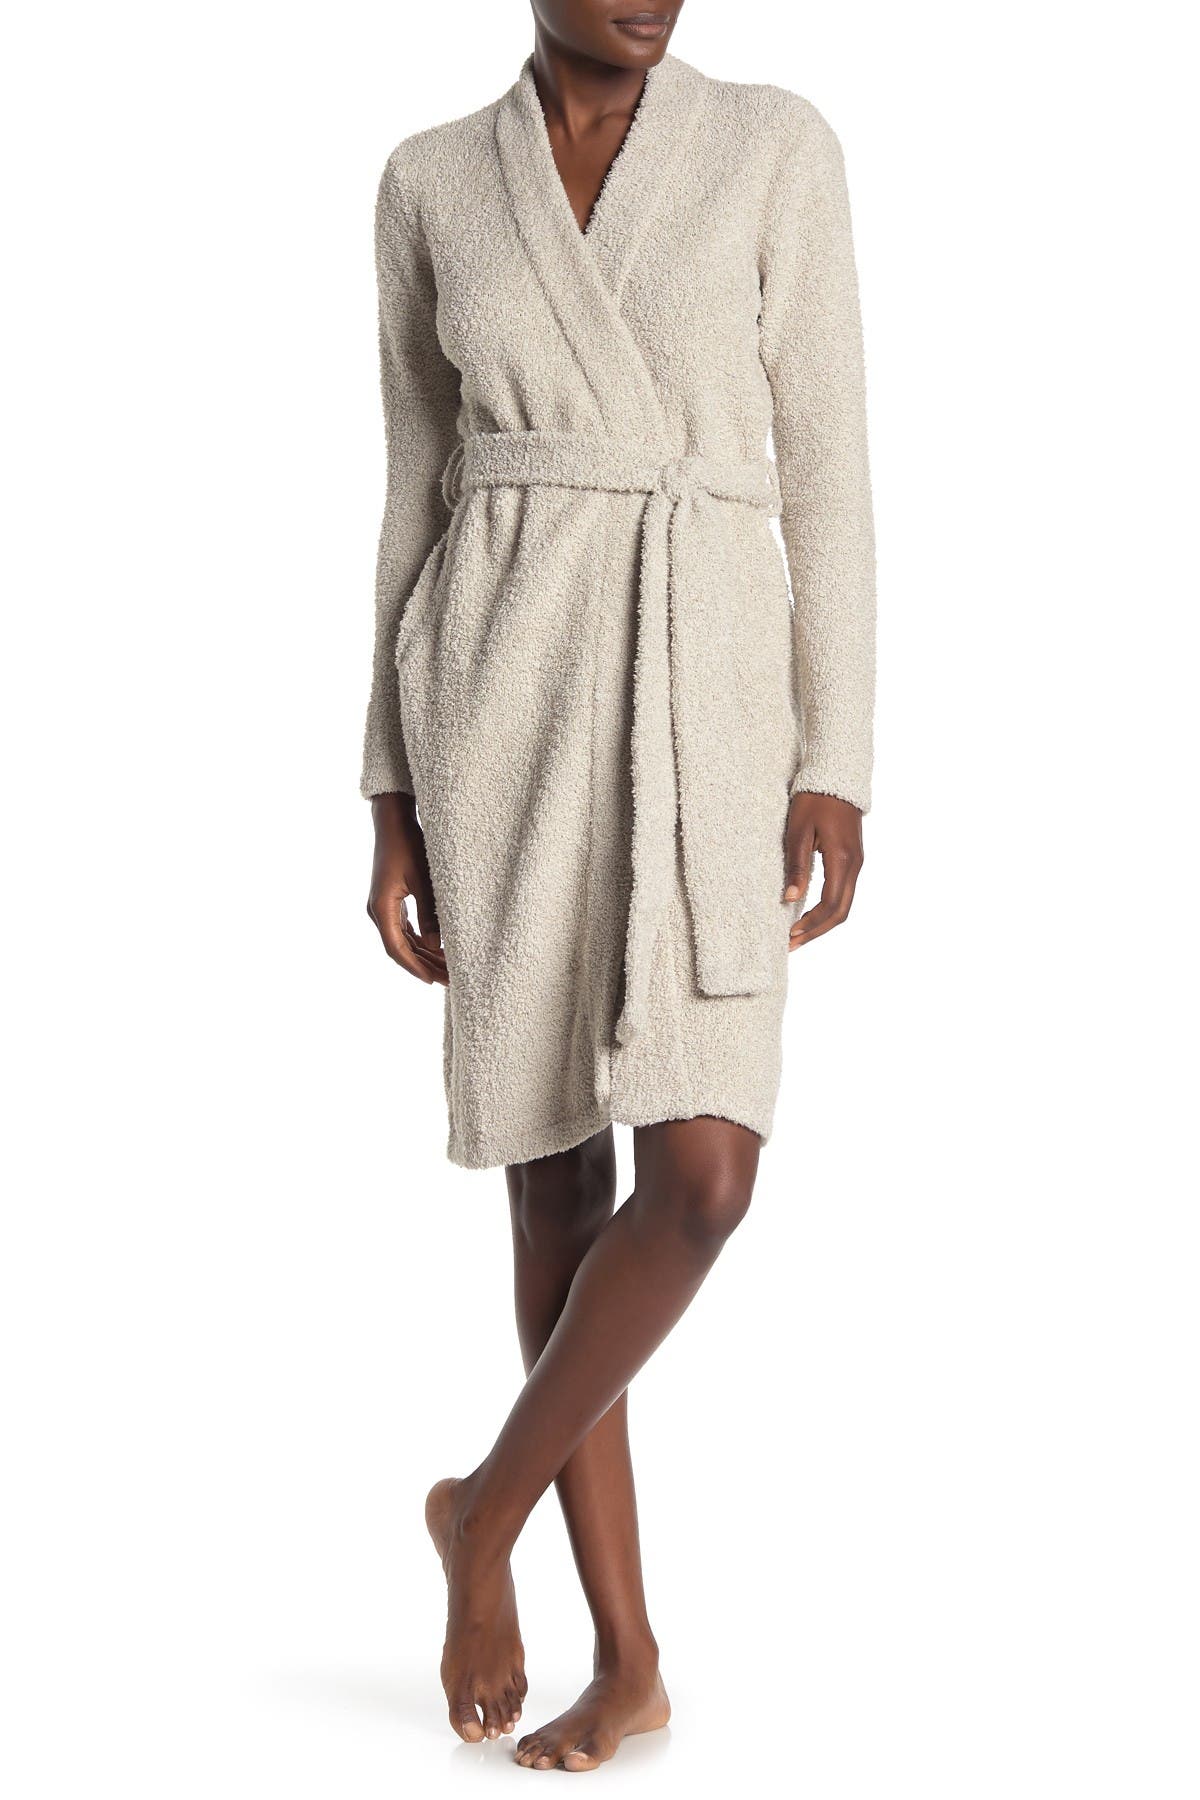 ugg womens robe sale